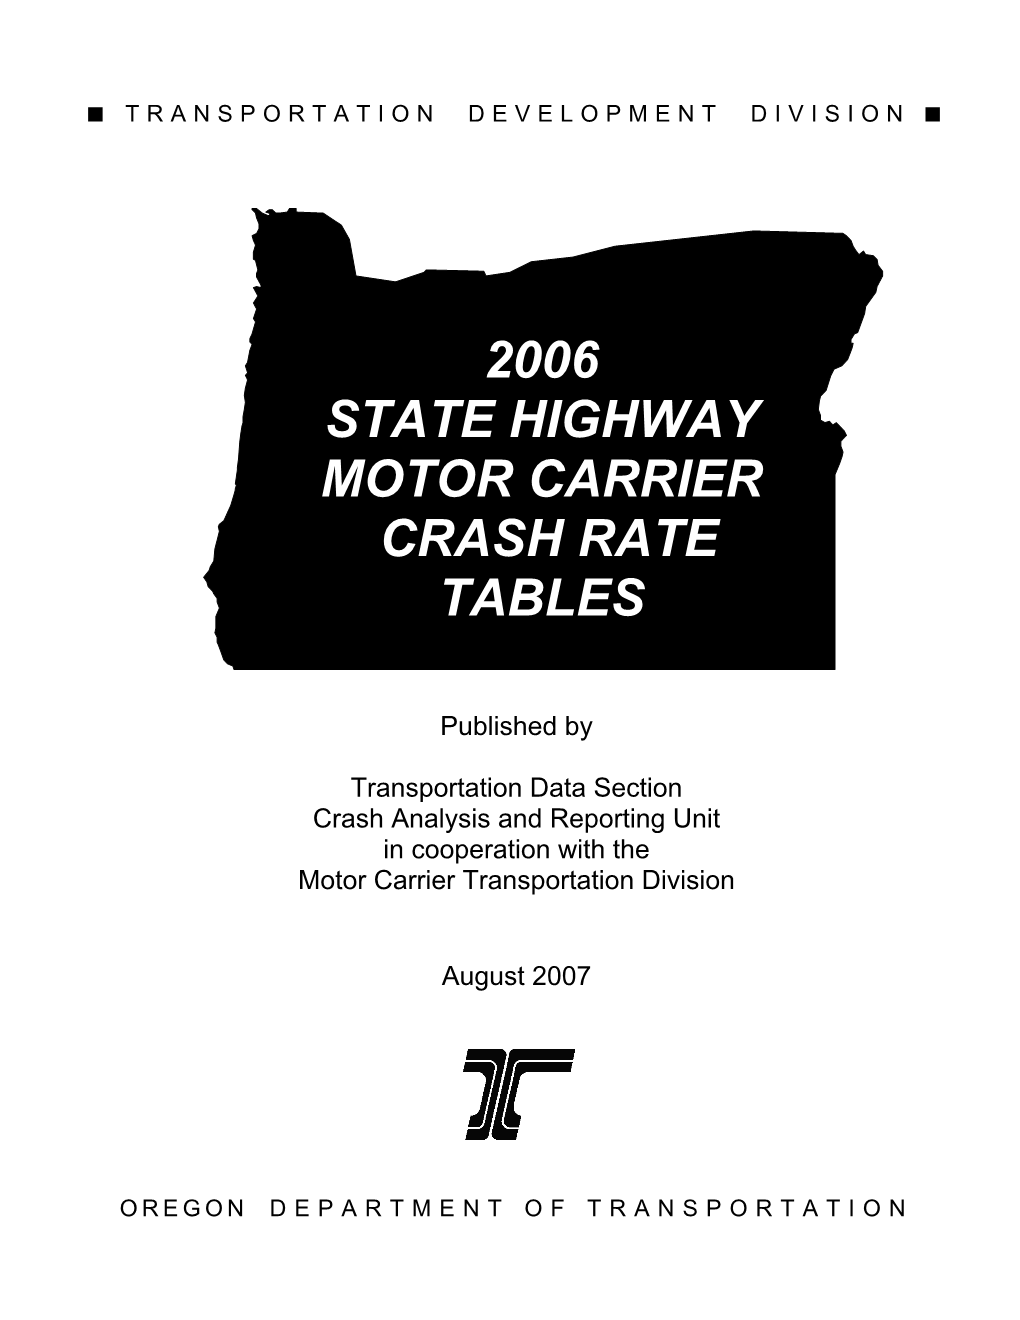 2006 State Highway Motor Carrier Crash Rate Tables